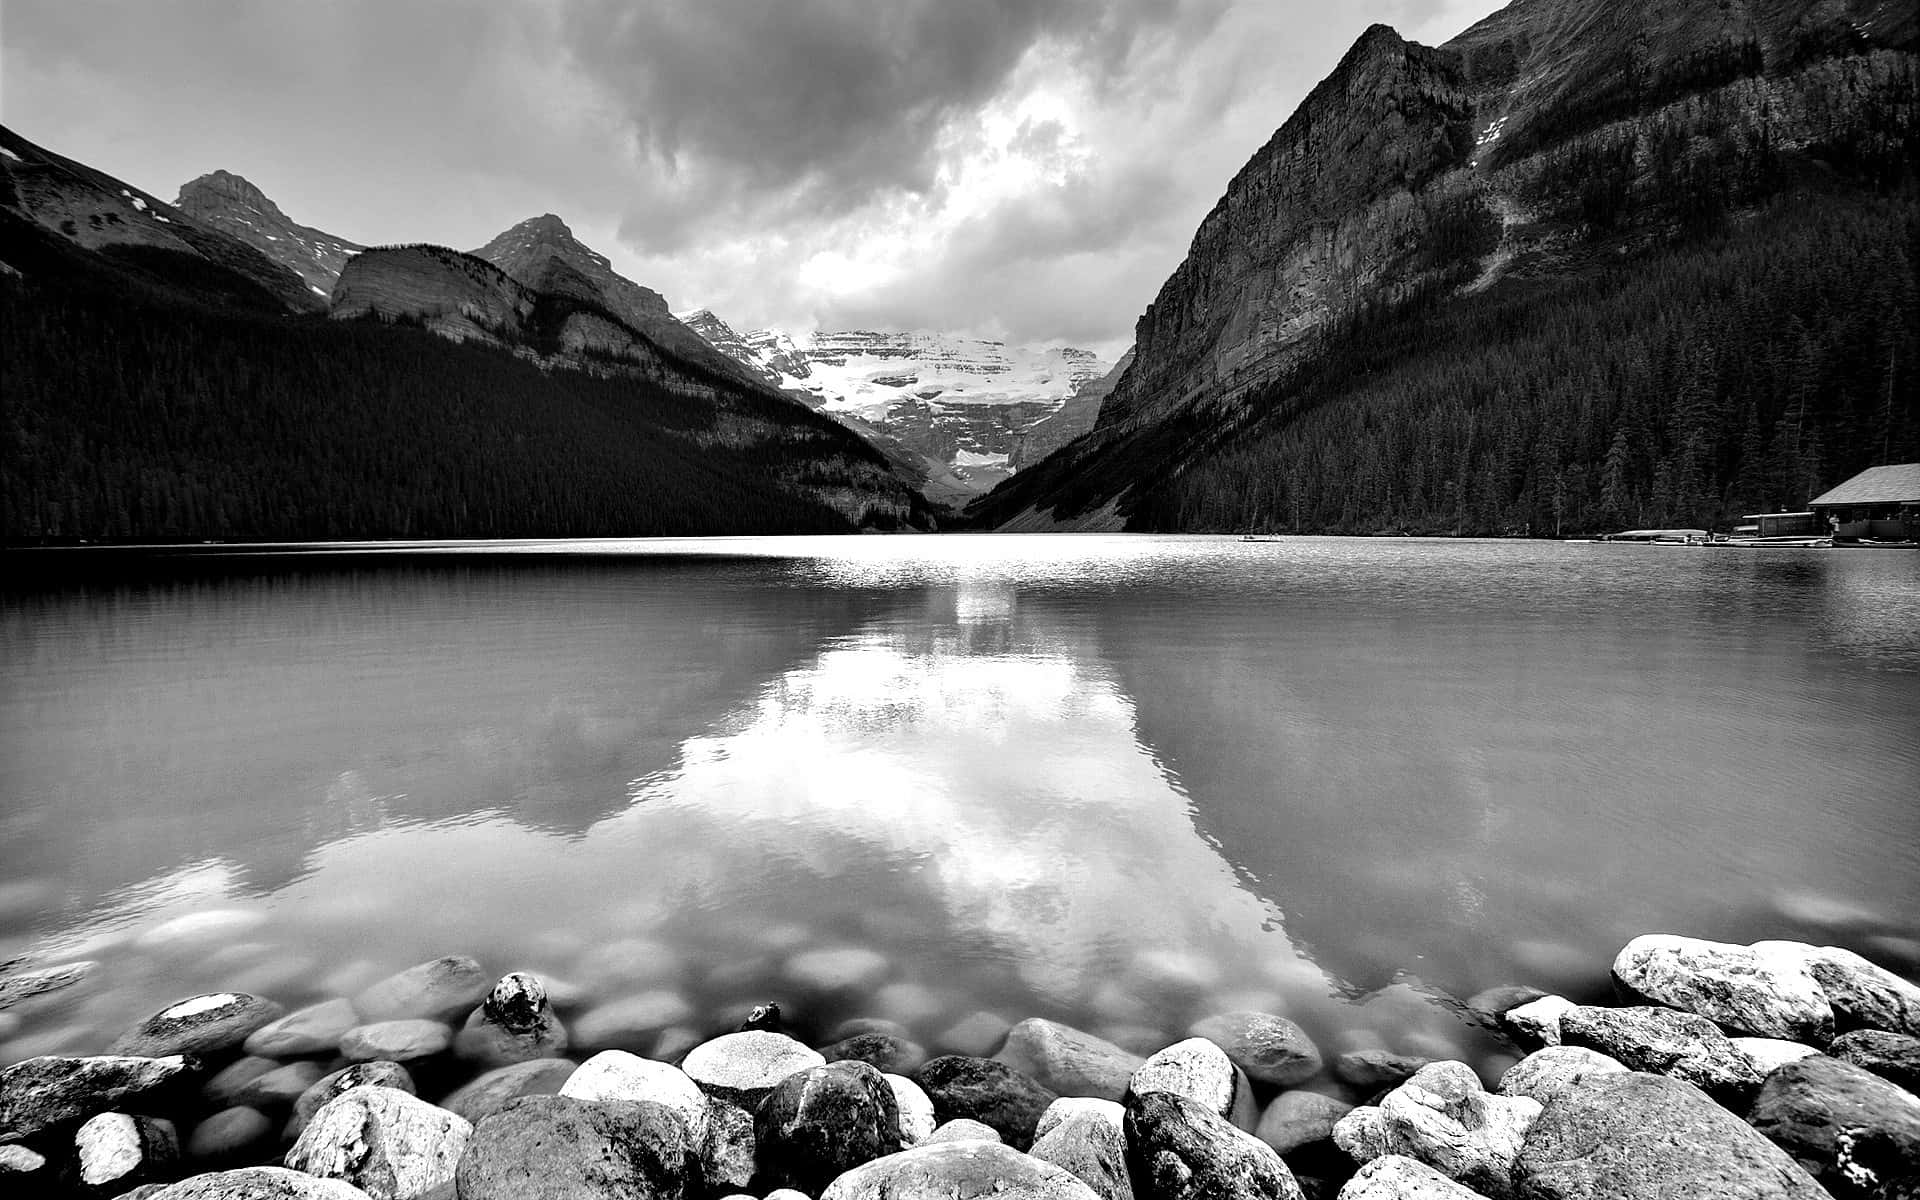 Monochrome Mountain Lake With Rocks